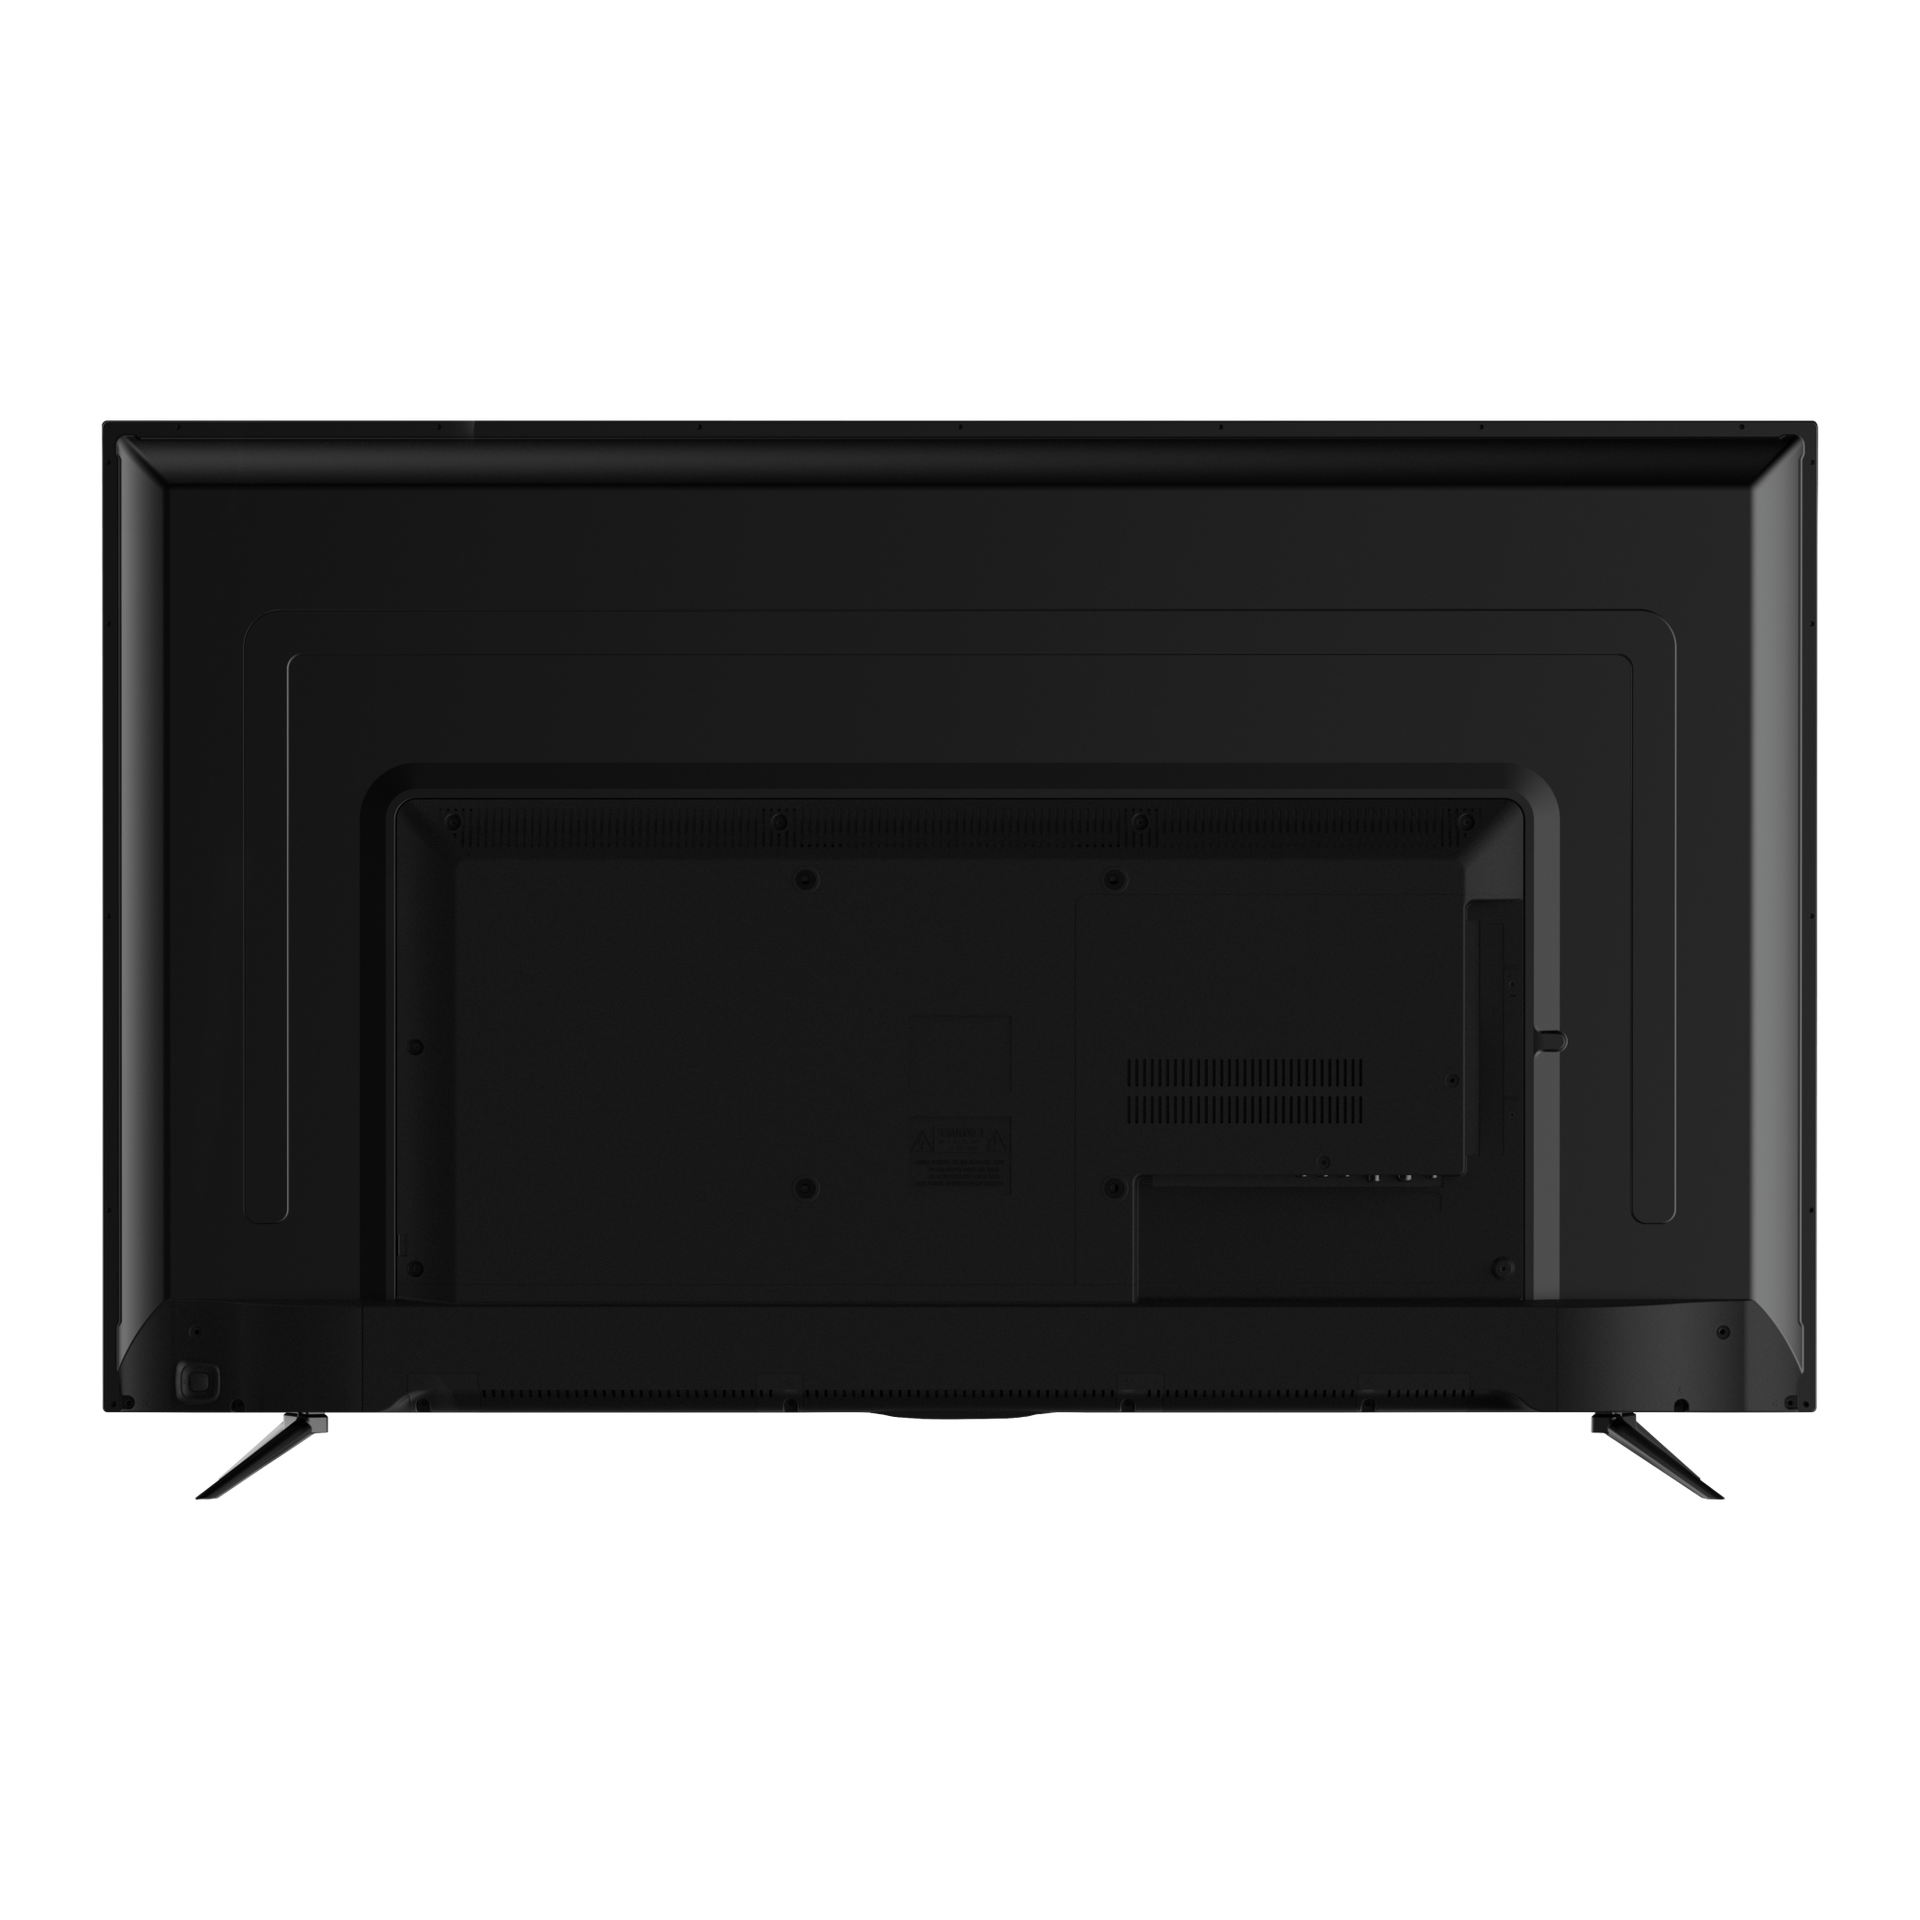 Умный телевизор SBER 4K Ultra HD 55 дюймов черный